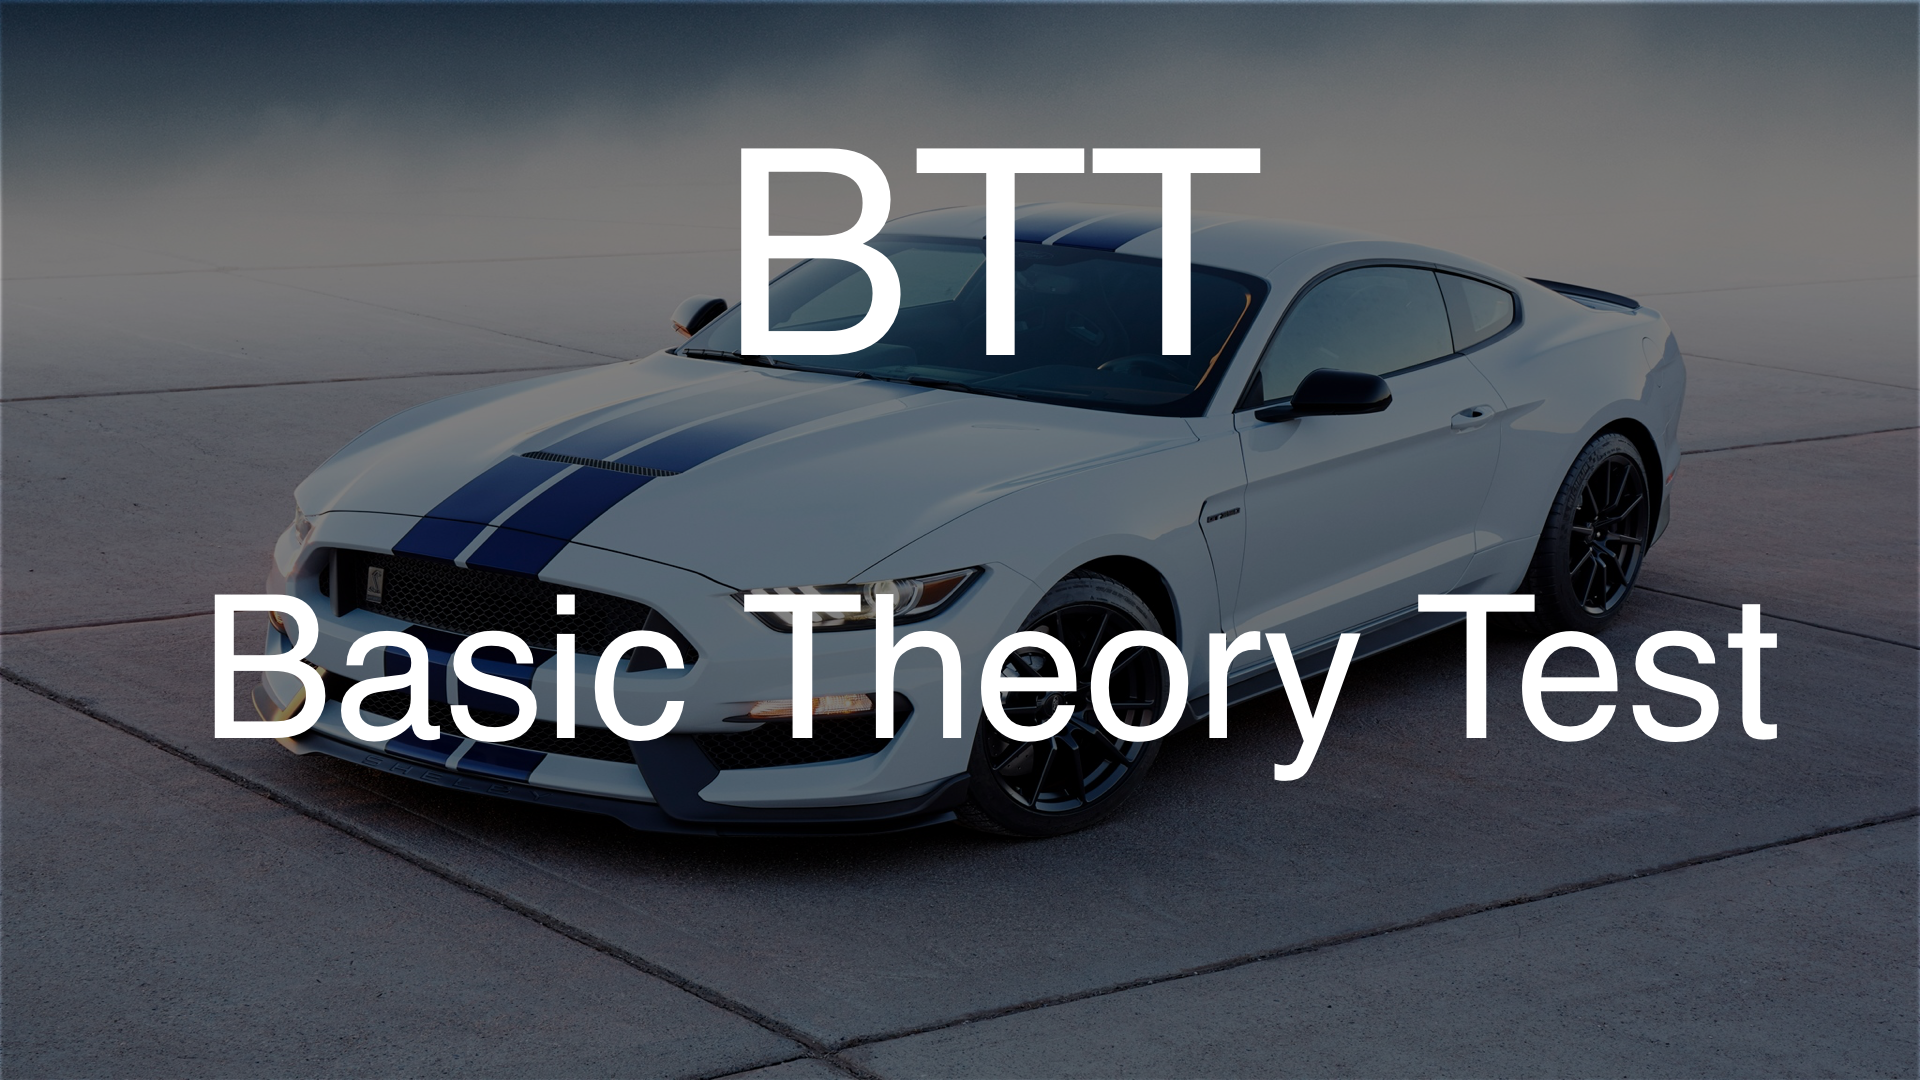 BTT - Basic Theory Test